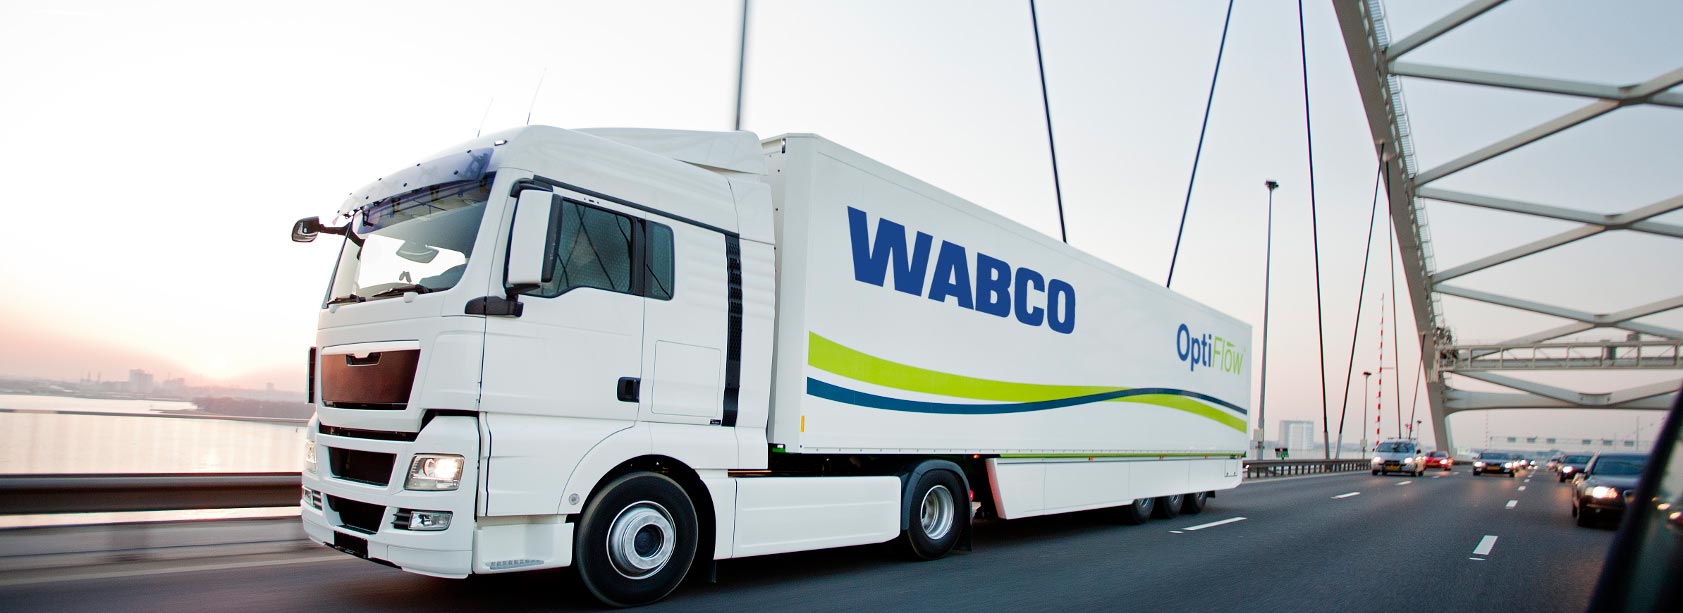 WABCO truck pic